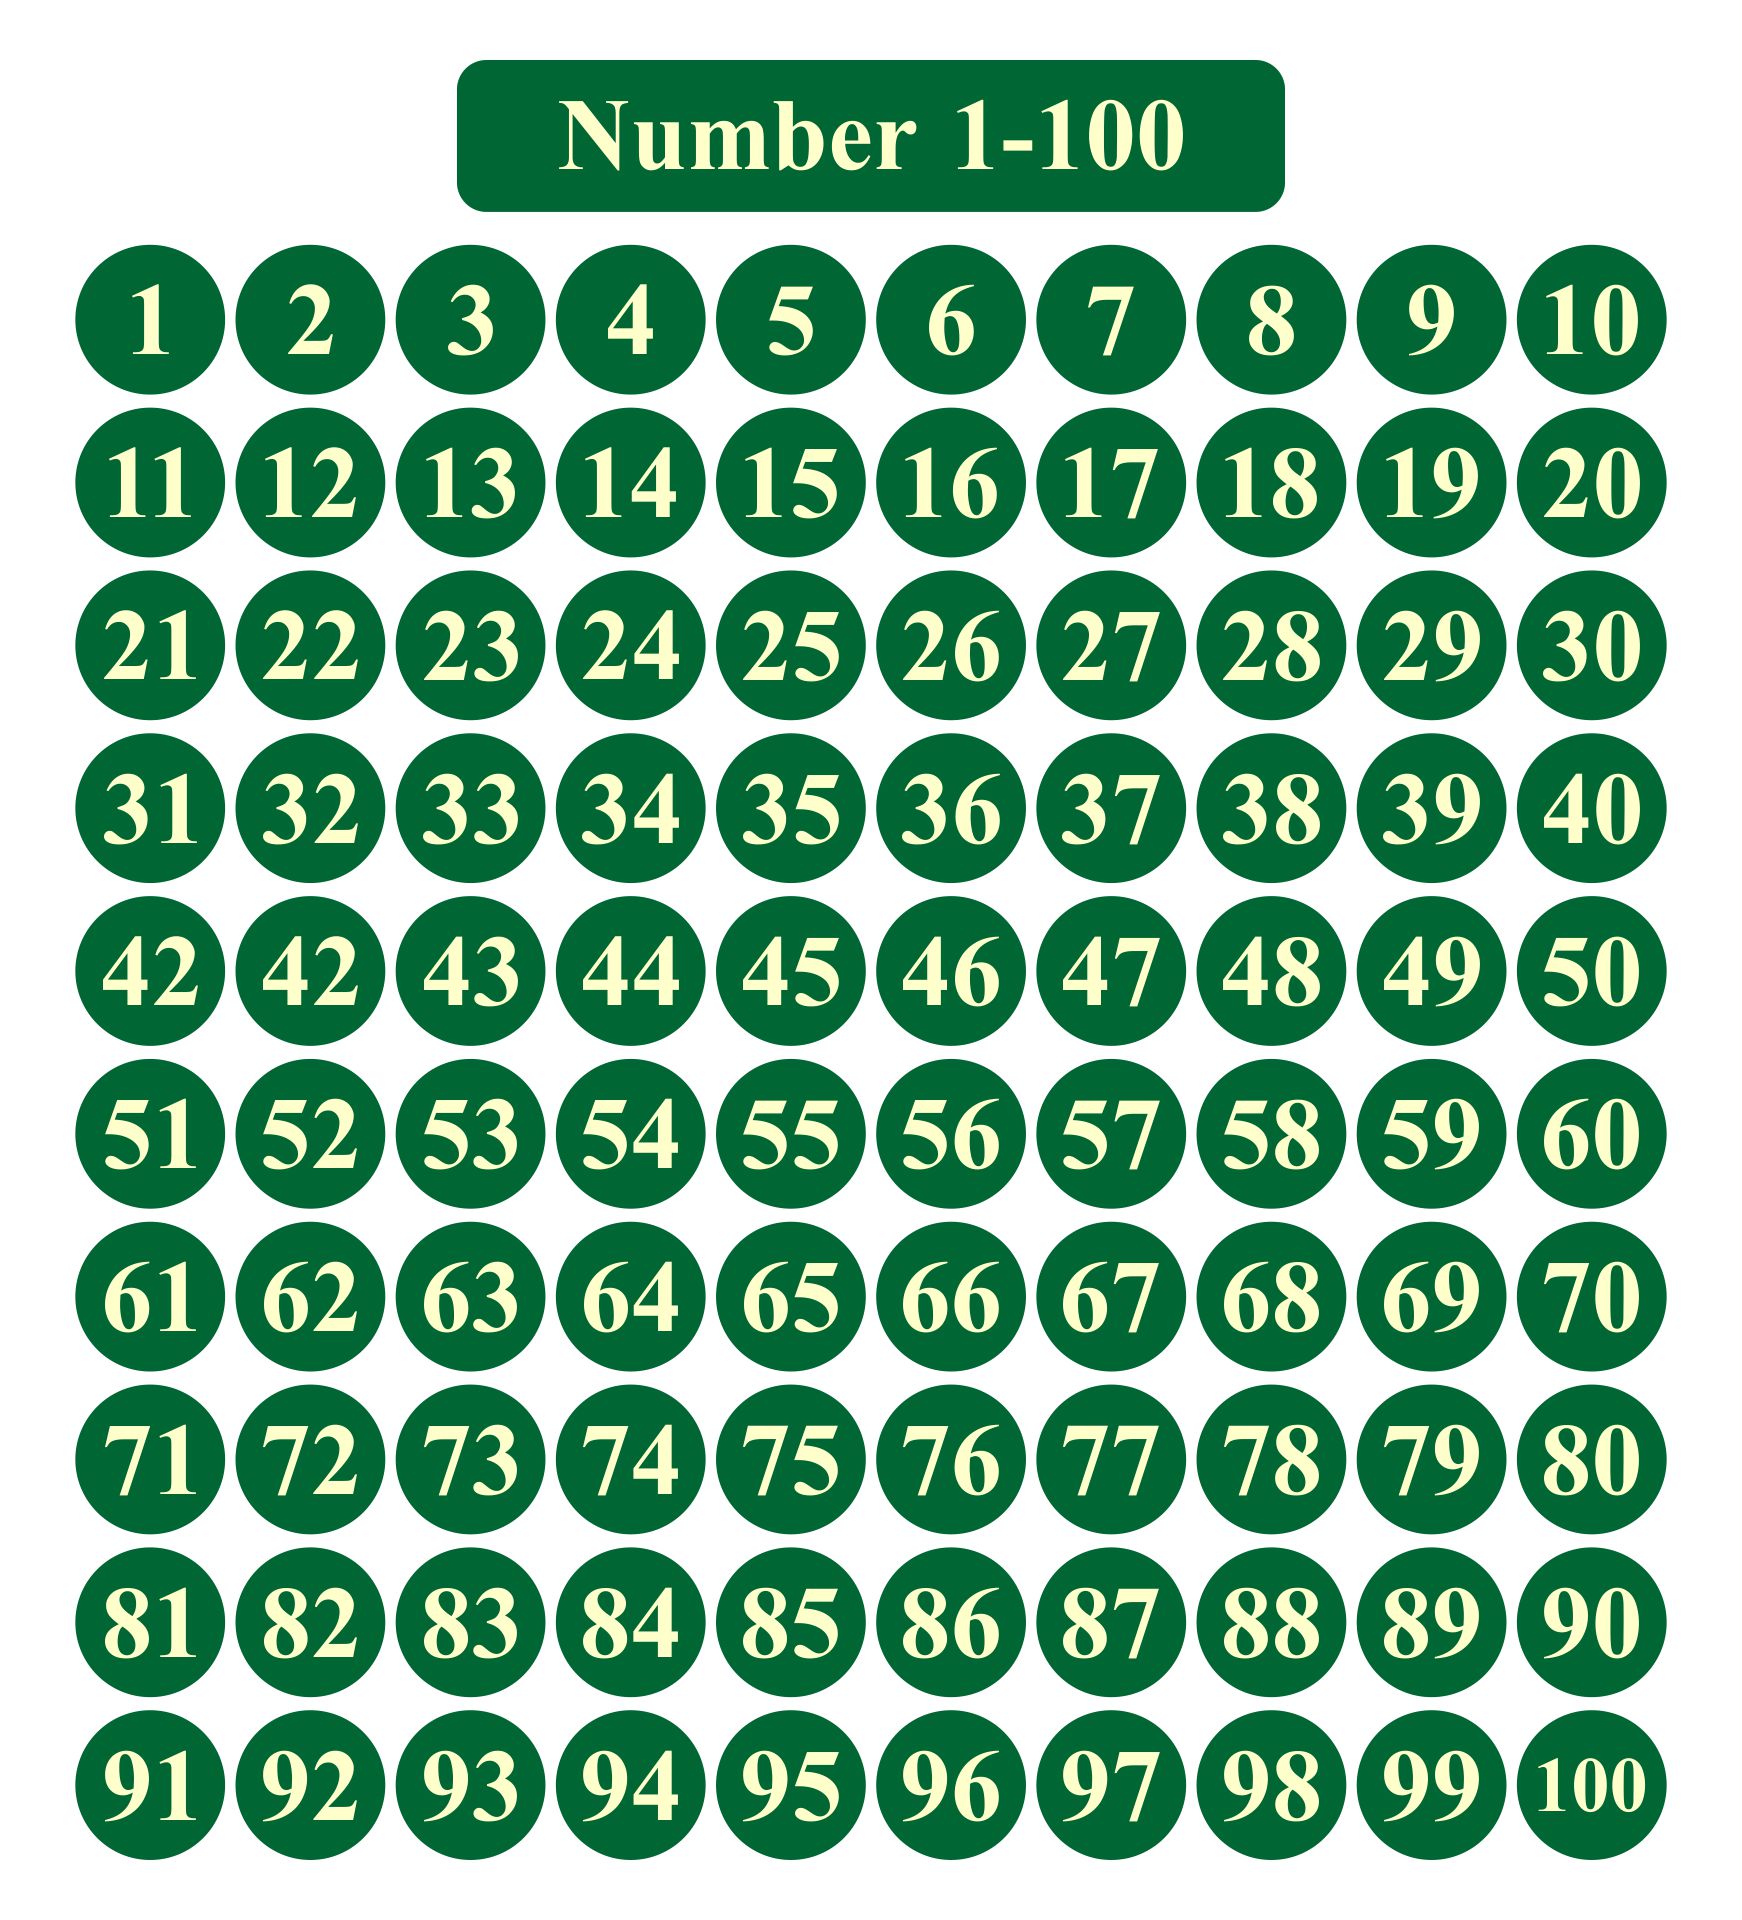 7-best-images-of-number-cards-1-100-printable-number-cards-1-20-number-flashcards-1-100